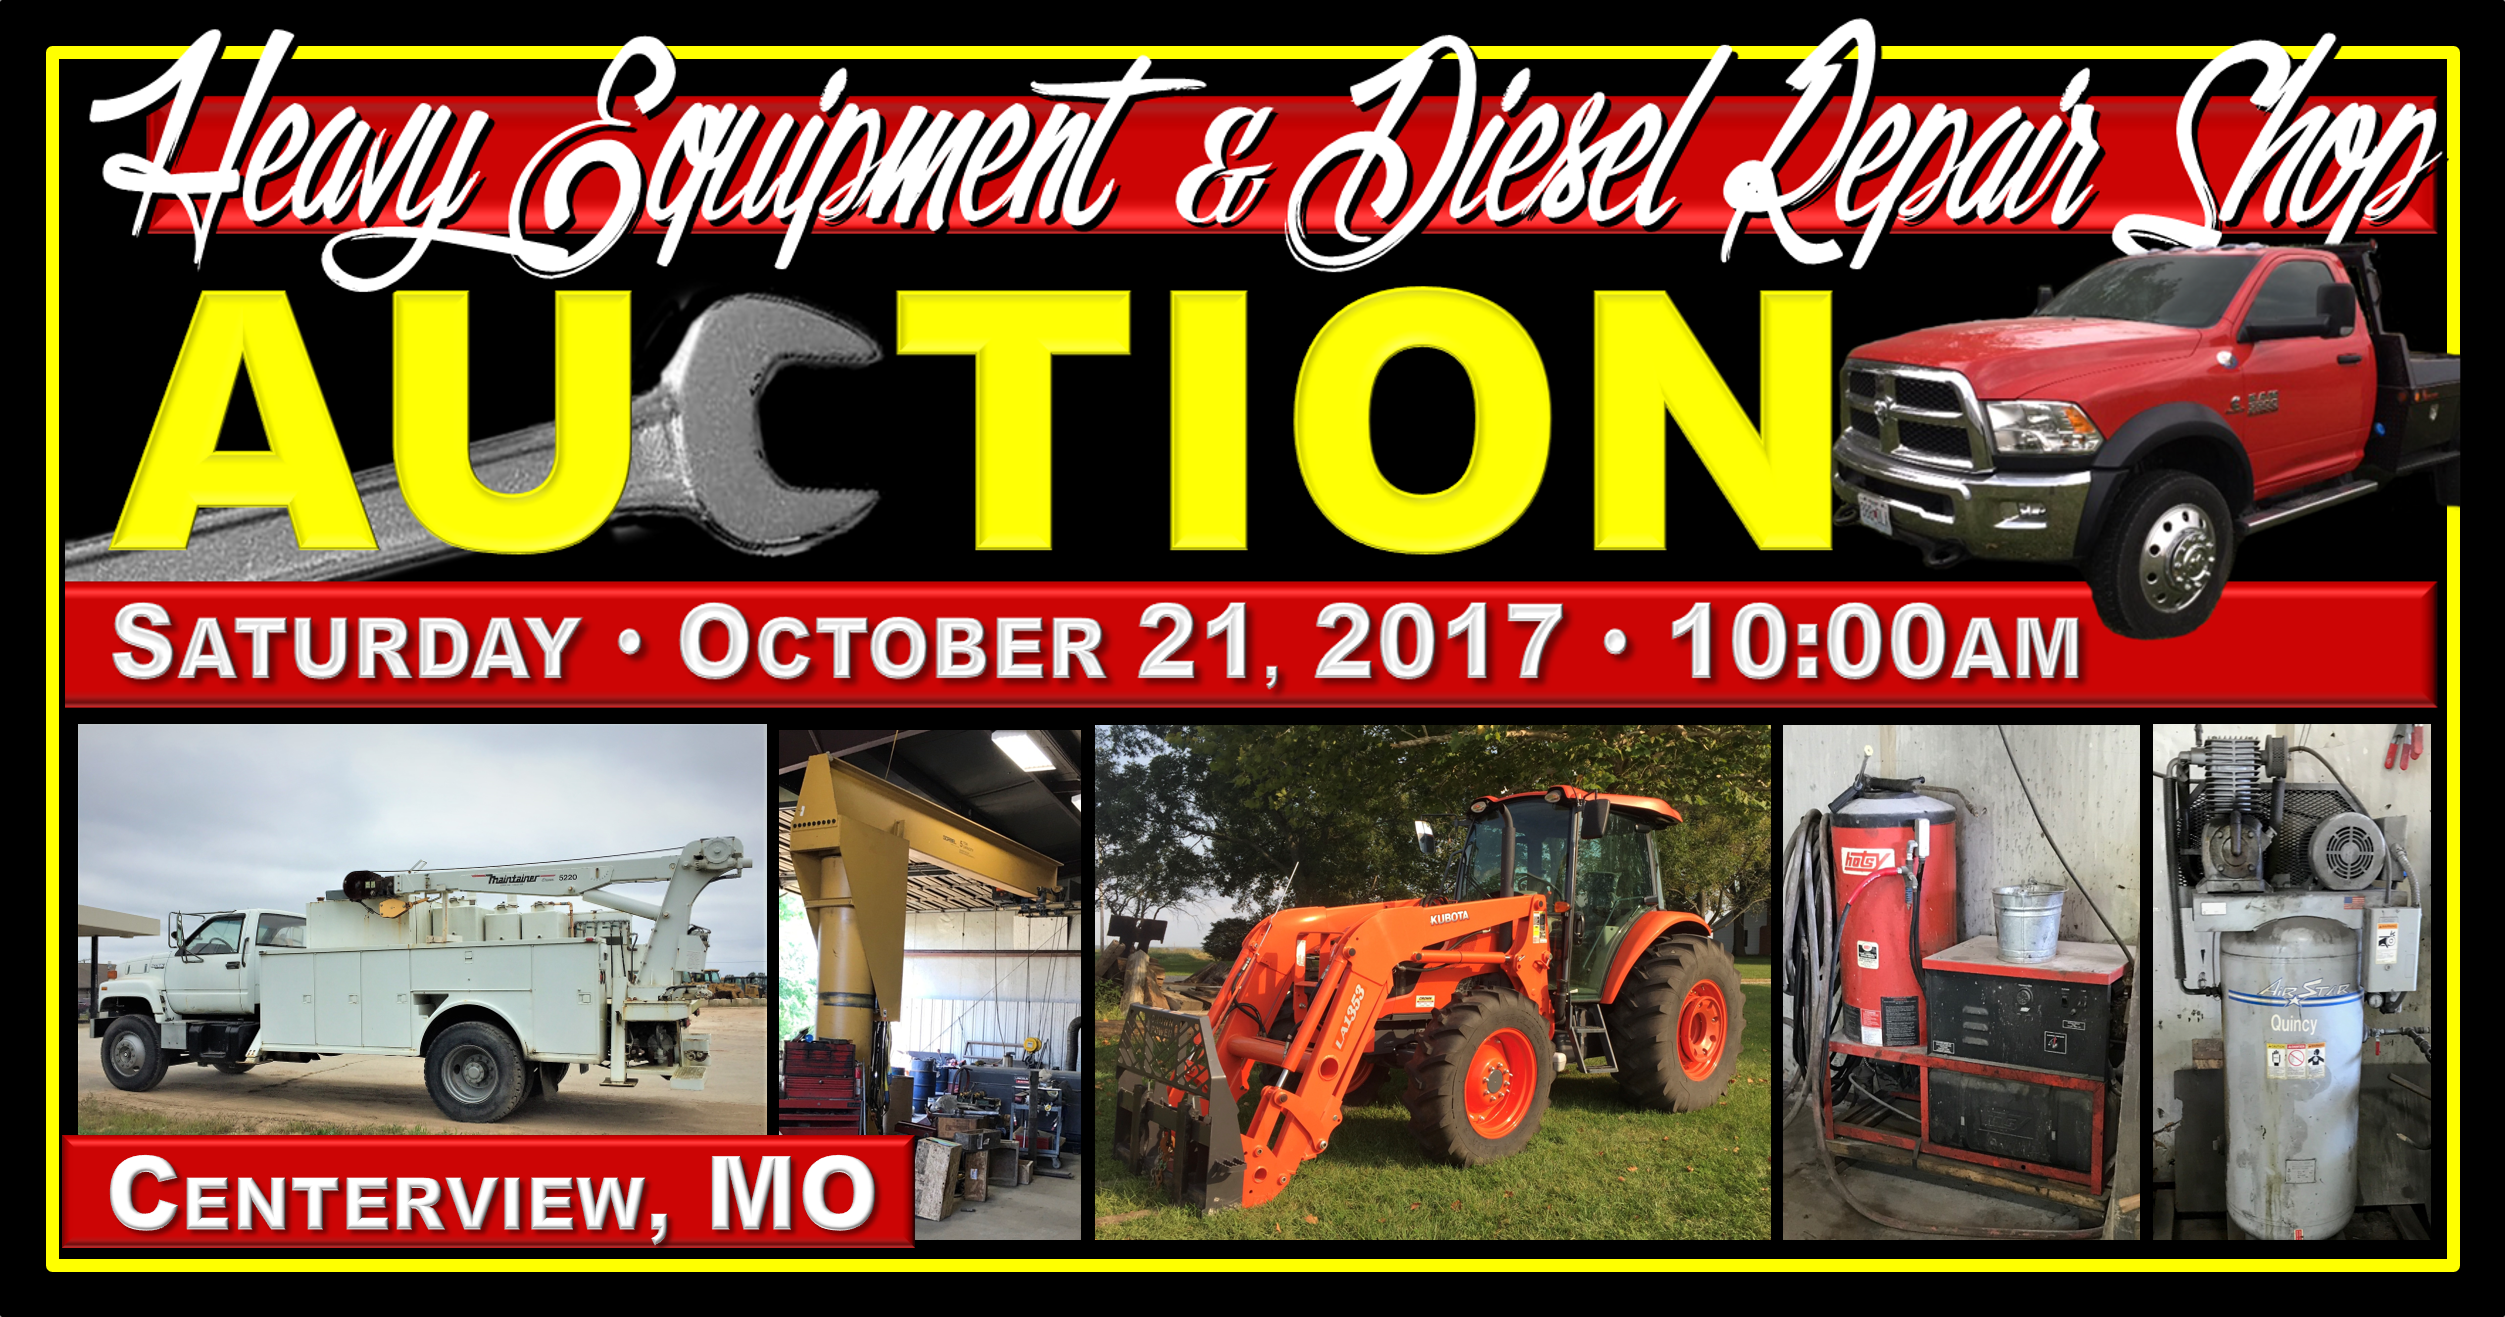 Heavy Equipment & Diesel Repair Shop Auction